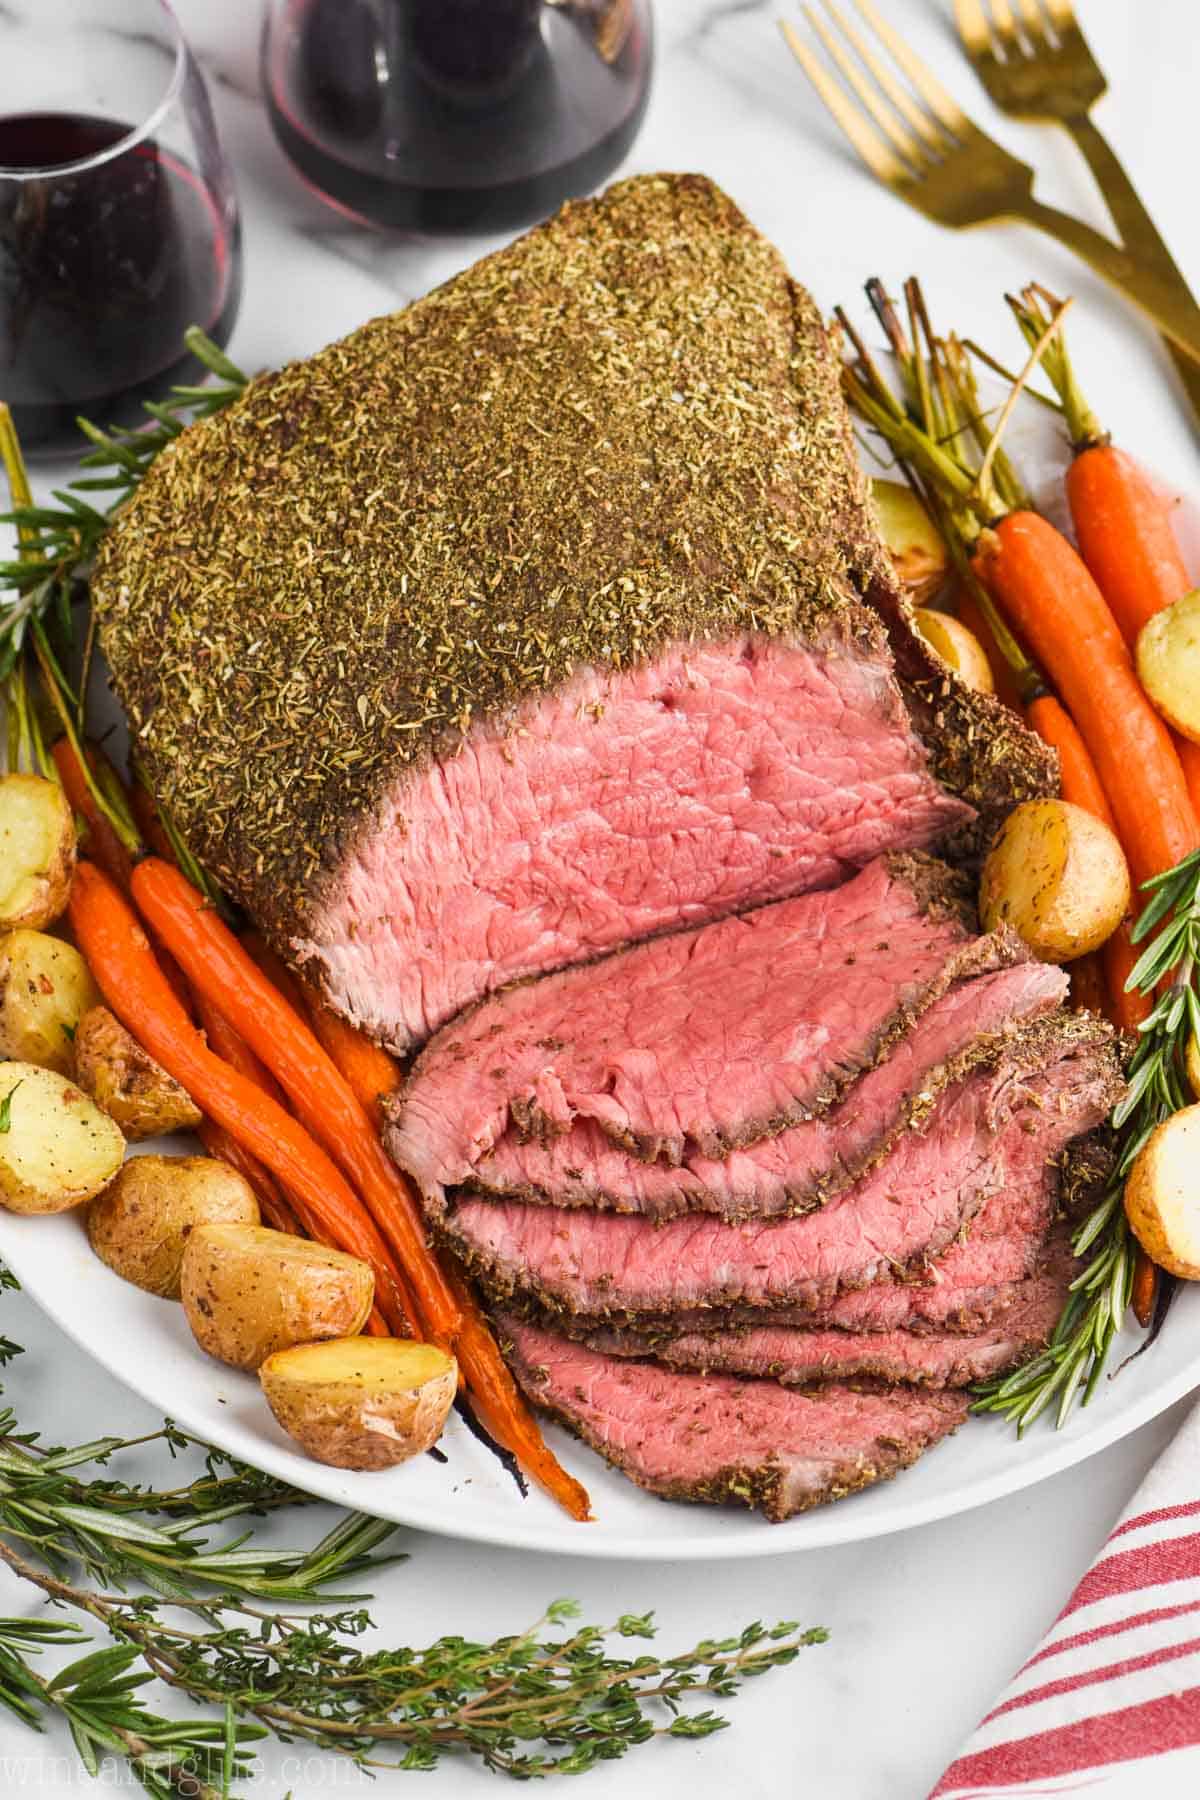 https://www.simplejoy.com/wp-content/uploads/2018/11/top_round_roast_beef_recipe_image.jpg